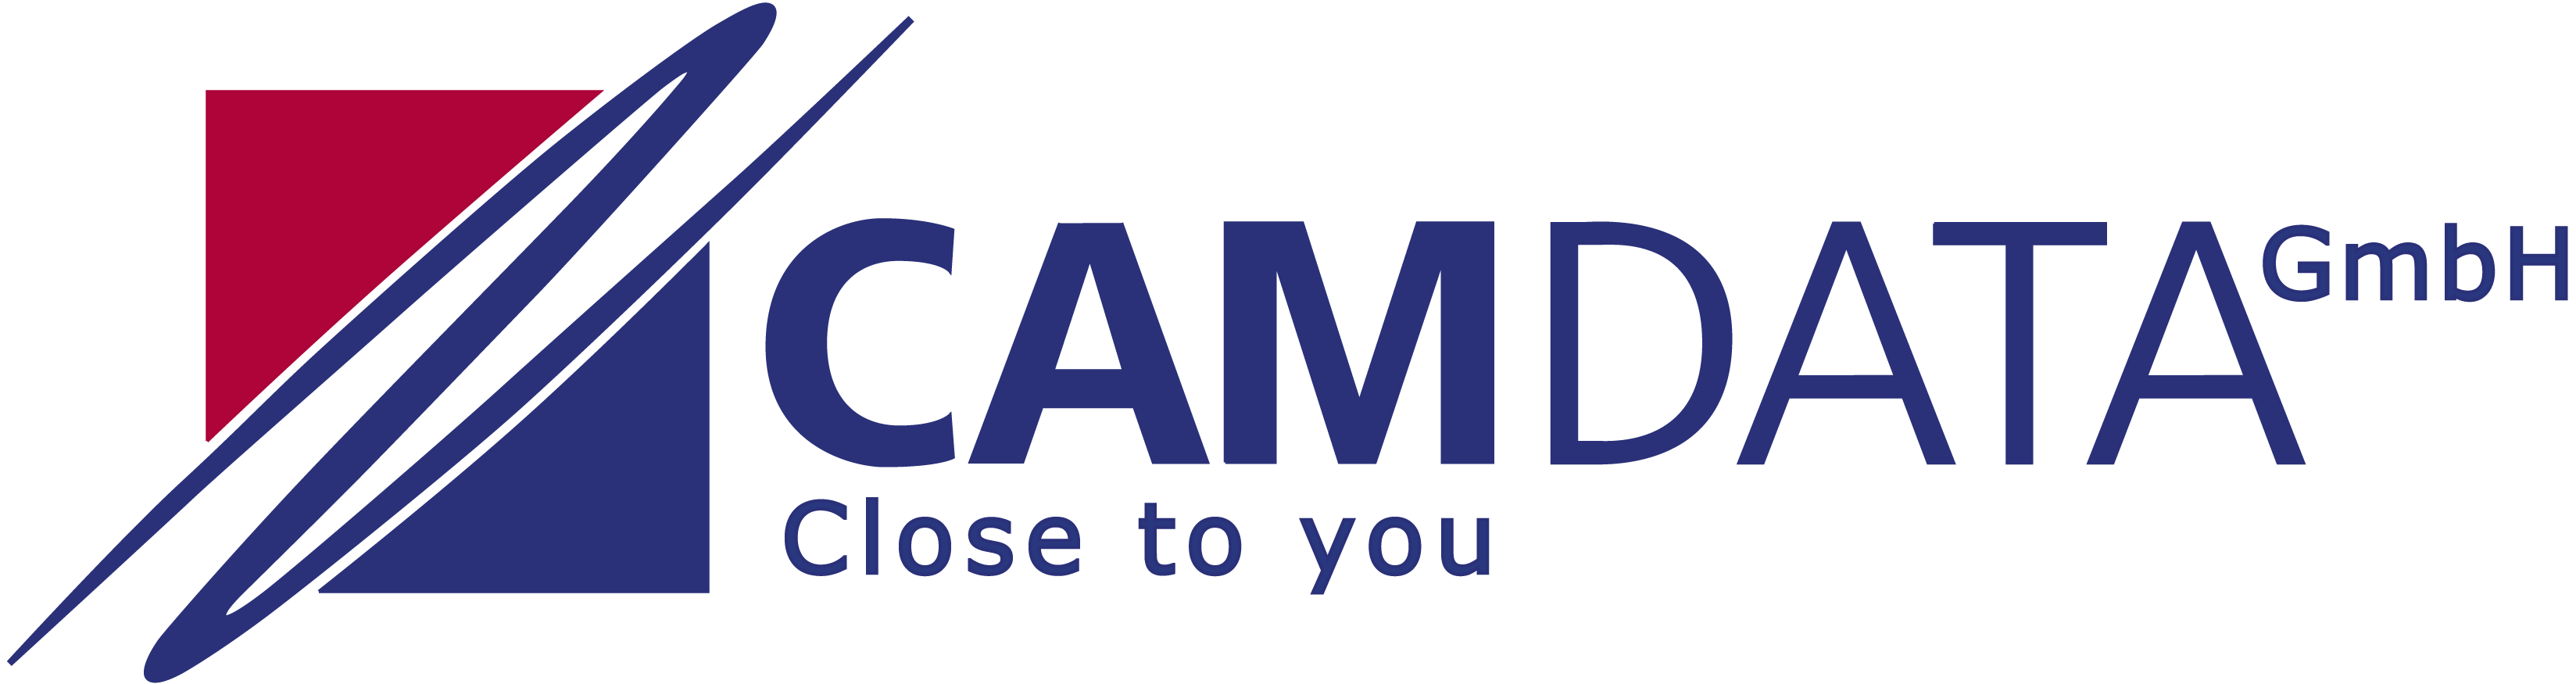 CamData Logo: Univention Partner